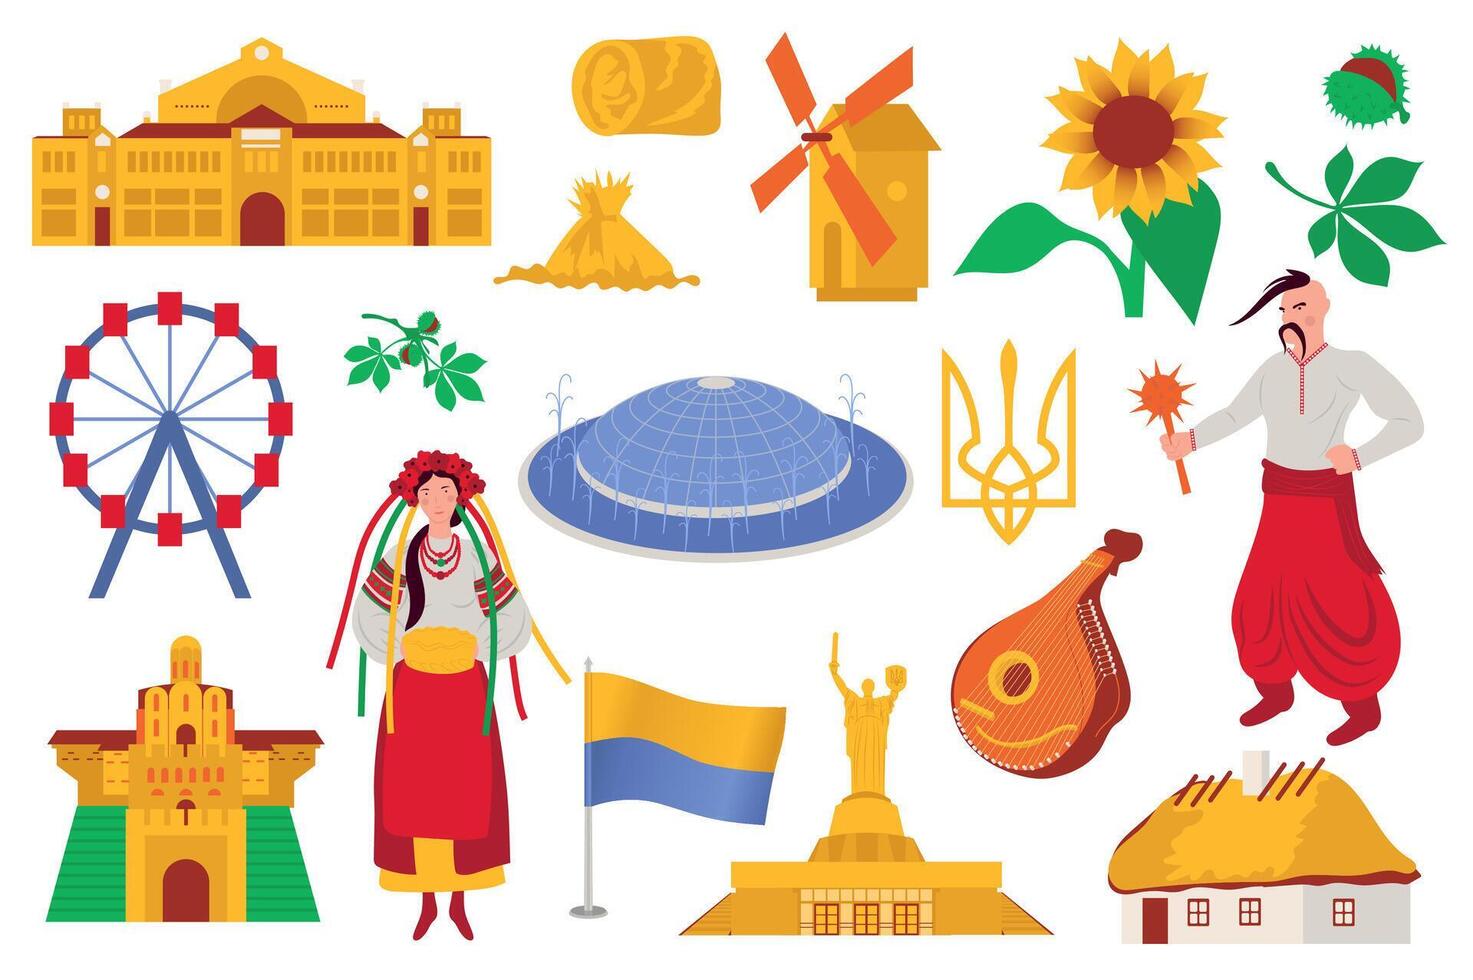 Ukraine culture symbols mega set in flat design. Bundle elements of ukrainians, yellow and blue flag, trident, chestnut, sunflower, Kyiv architecture. Vector illustration isolated graphic objects